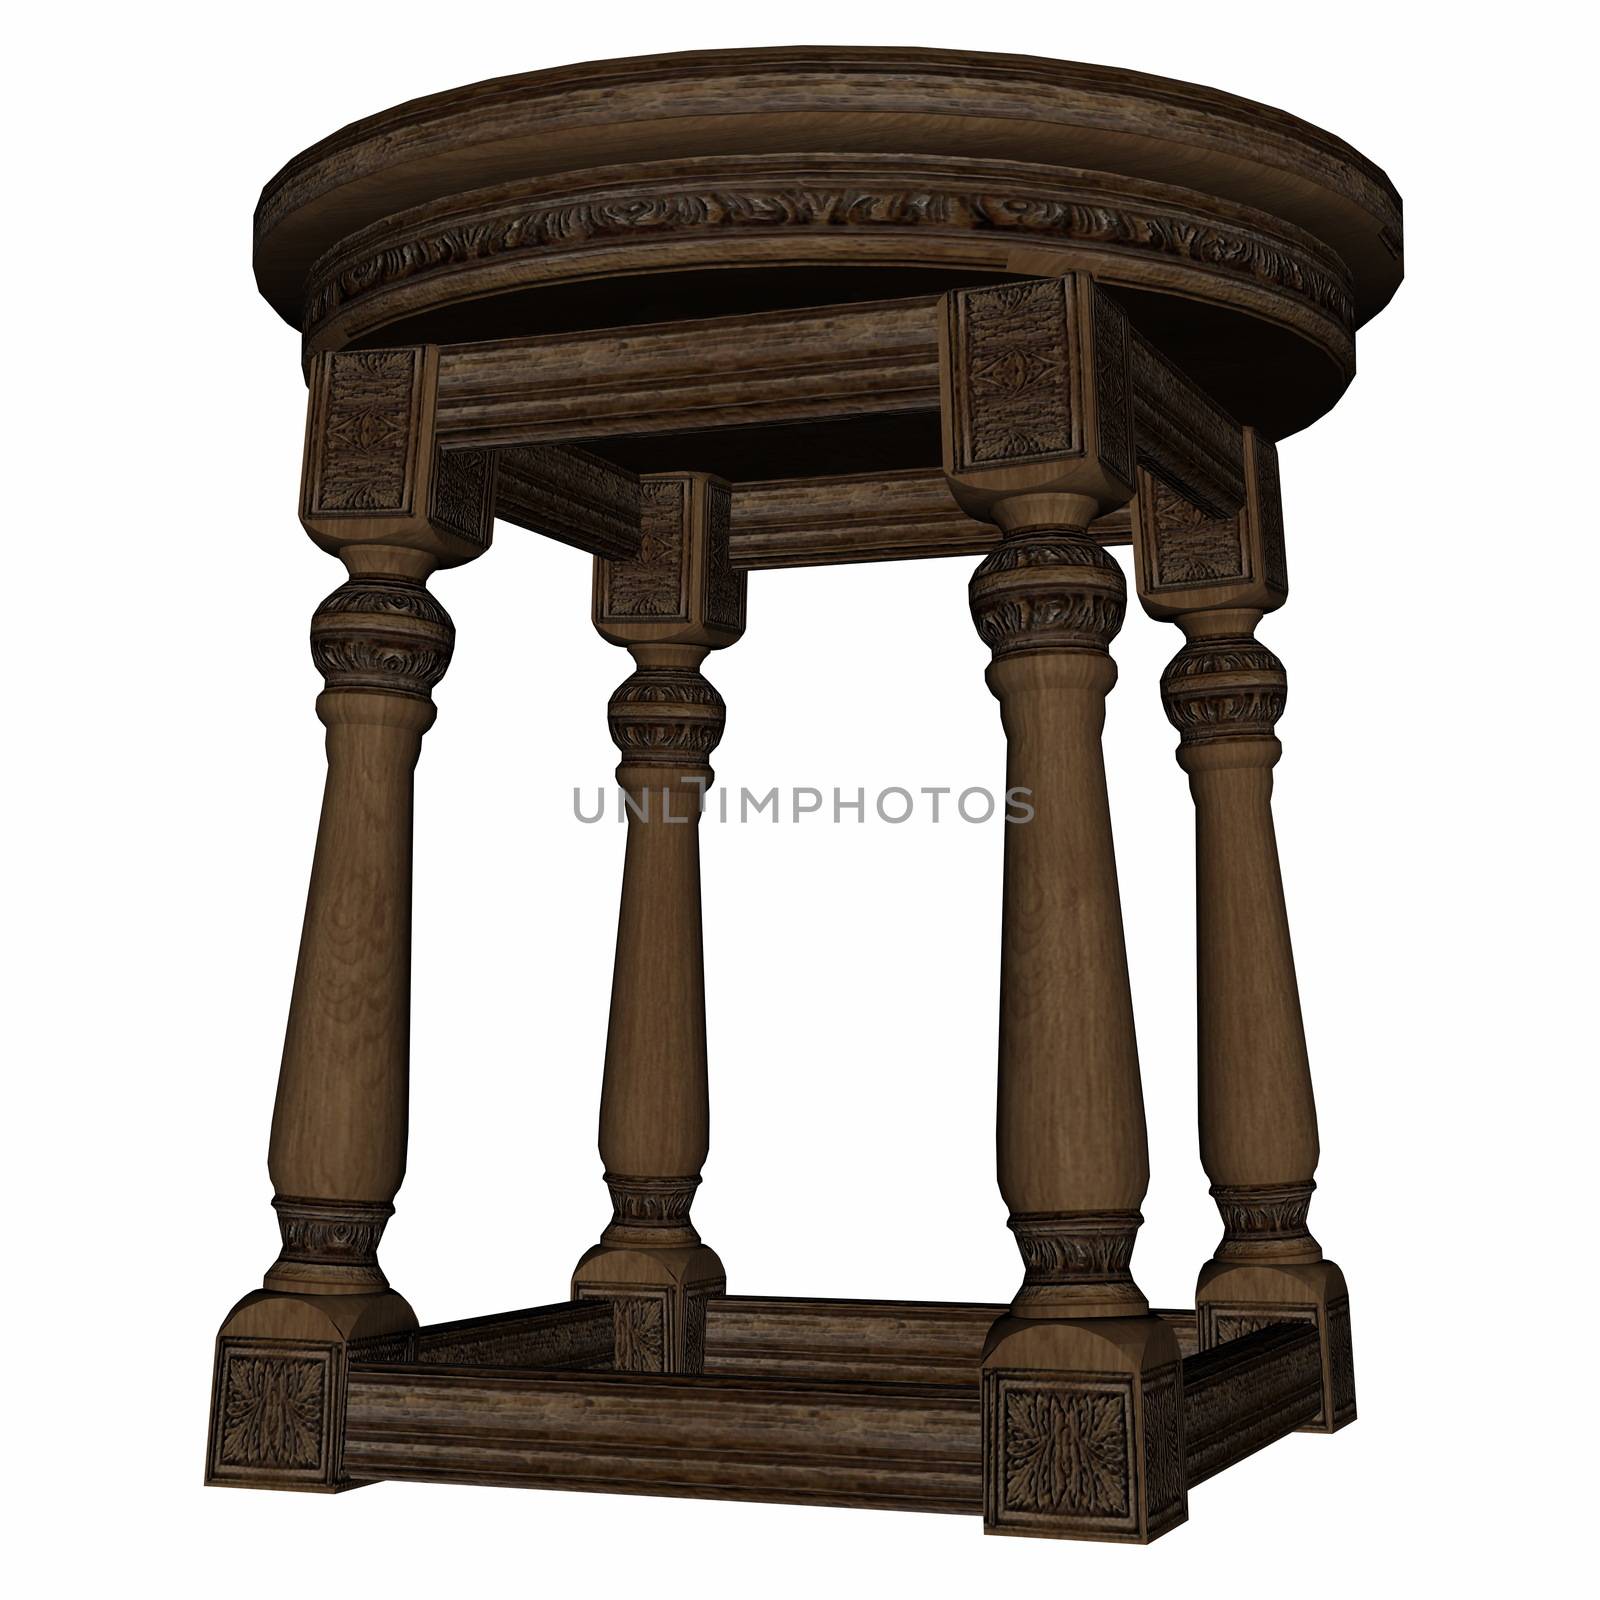 Vintage wooden stool - 3D render by Elenaphotos21